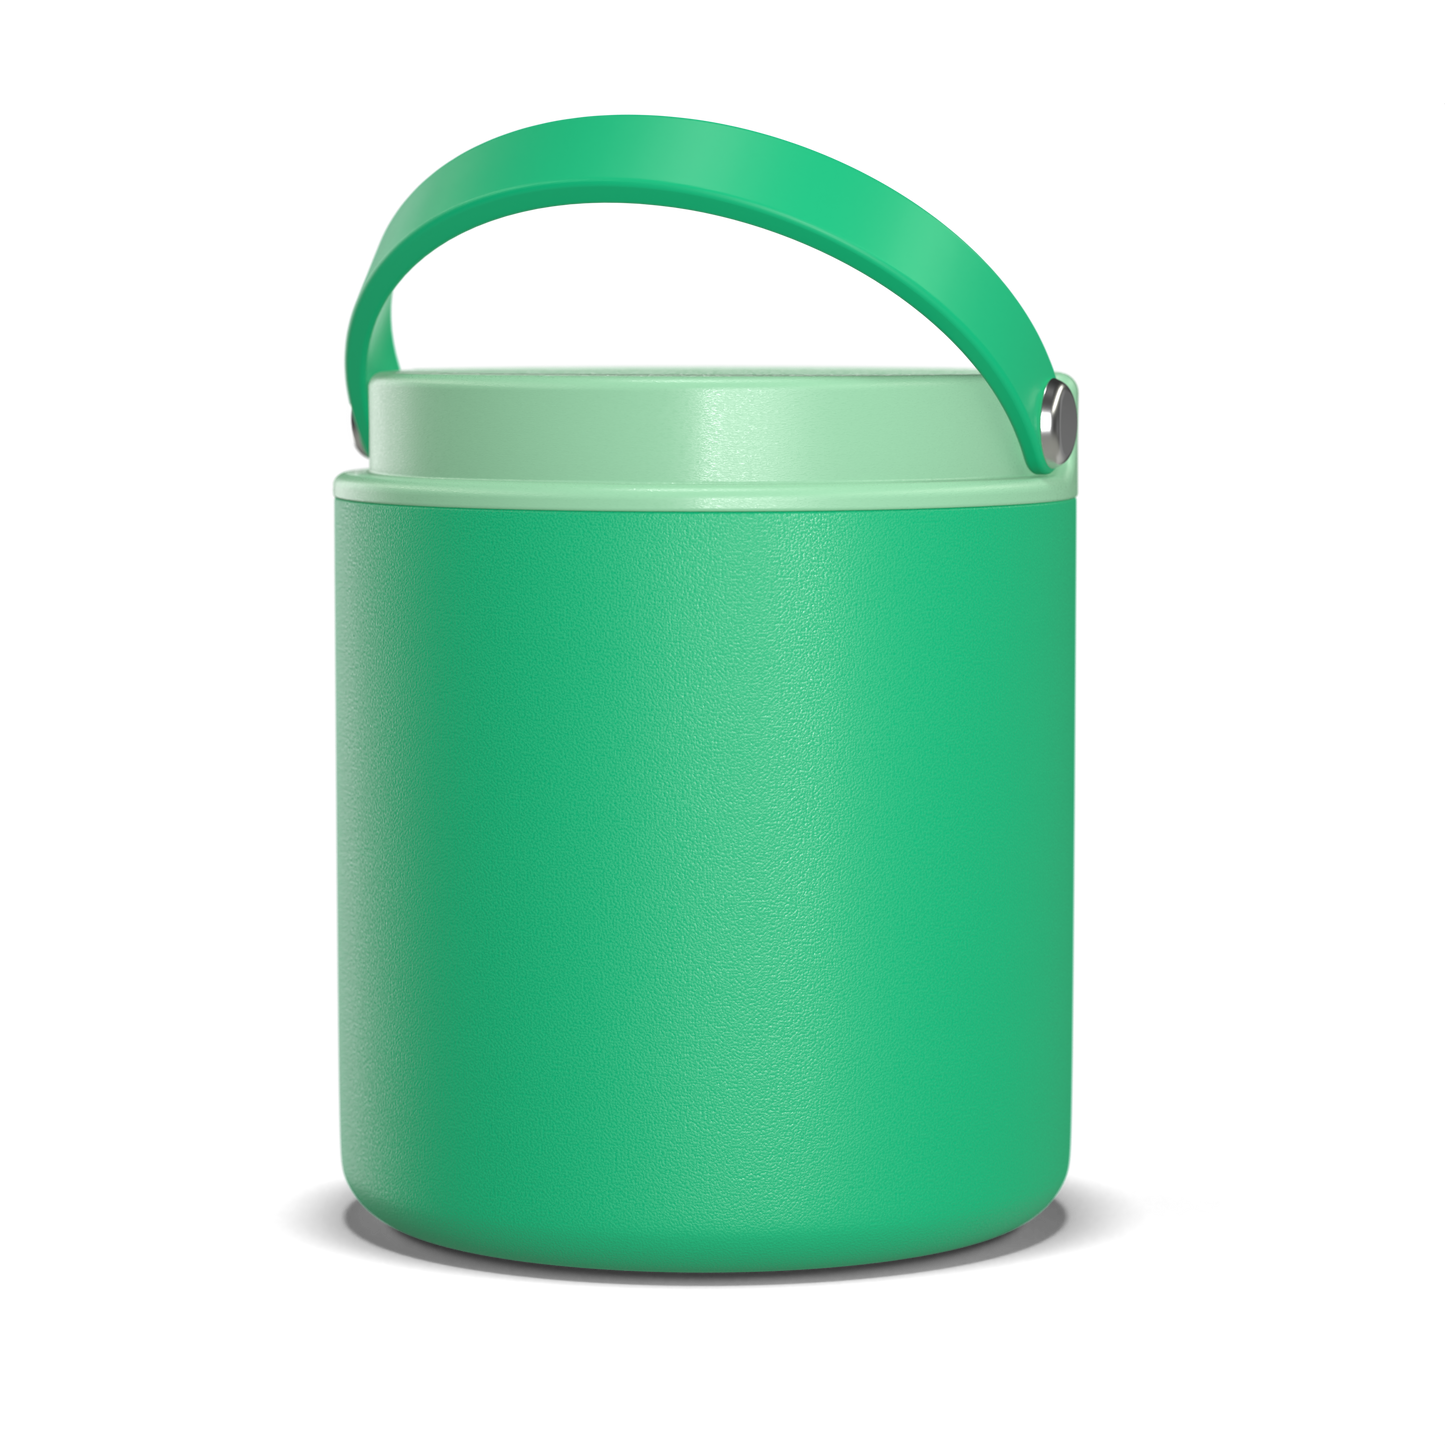 25oz Stainless Steel Vacuum Insulated Thermos Food Jar - Jade